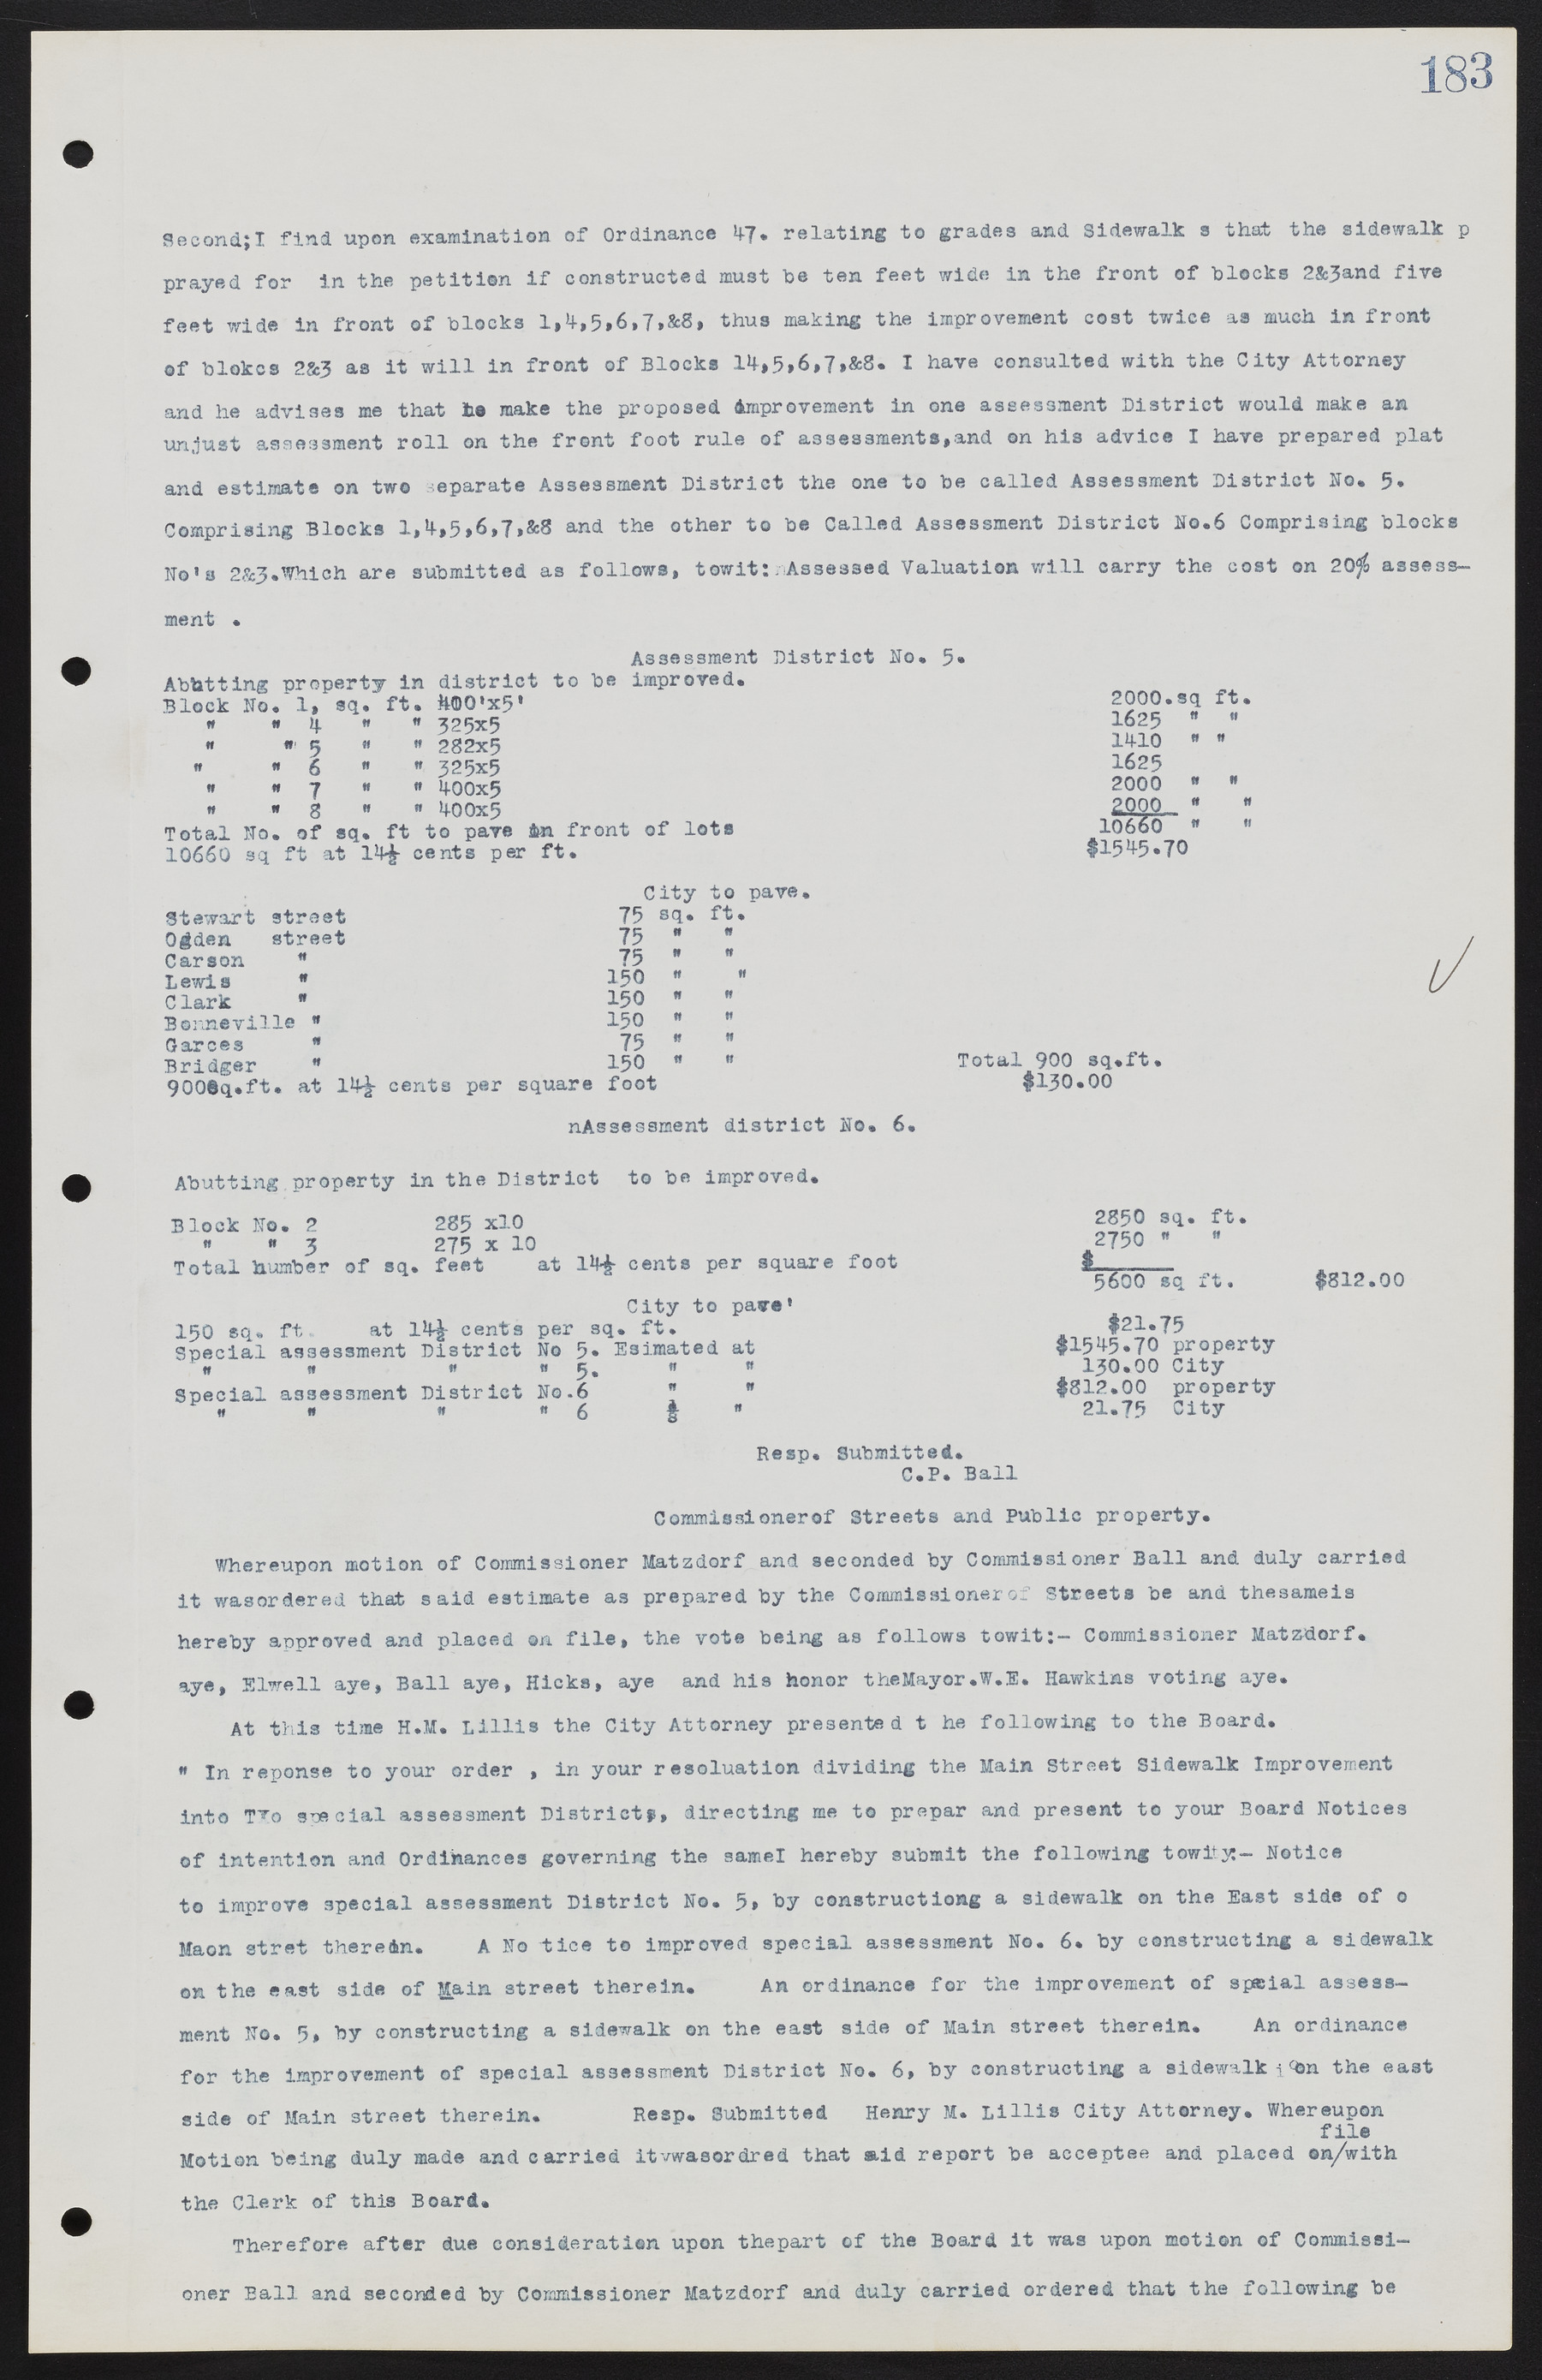 Las Vegas City Commission Minutes, June 22, 1911 to February 7, 1922, lvc000001-199